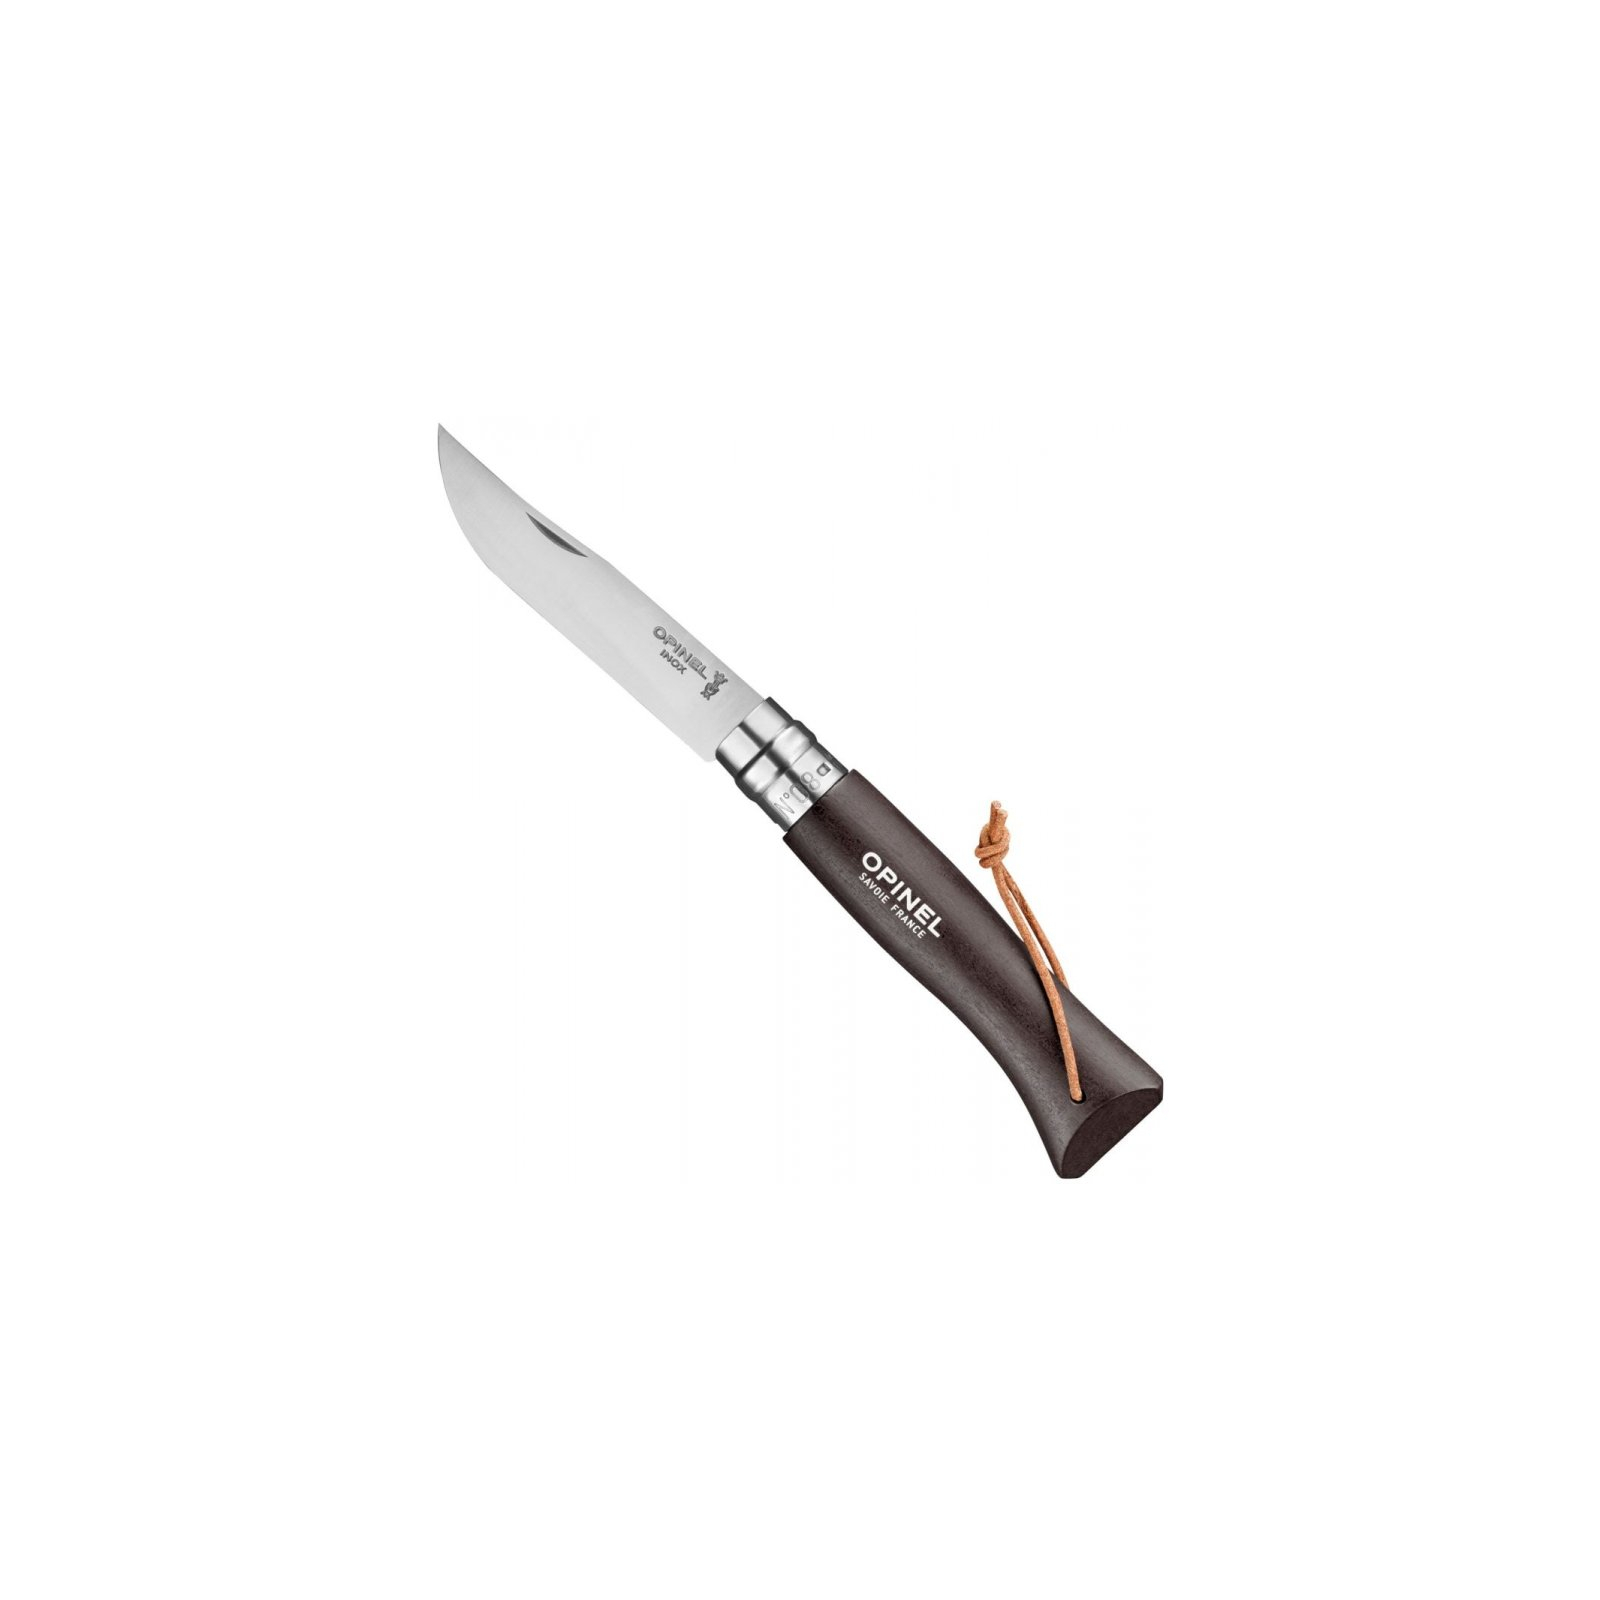 Нож Opinel №8 Inox VRI Trekking зеленый, без упаковки (001703)